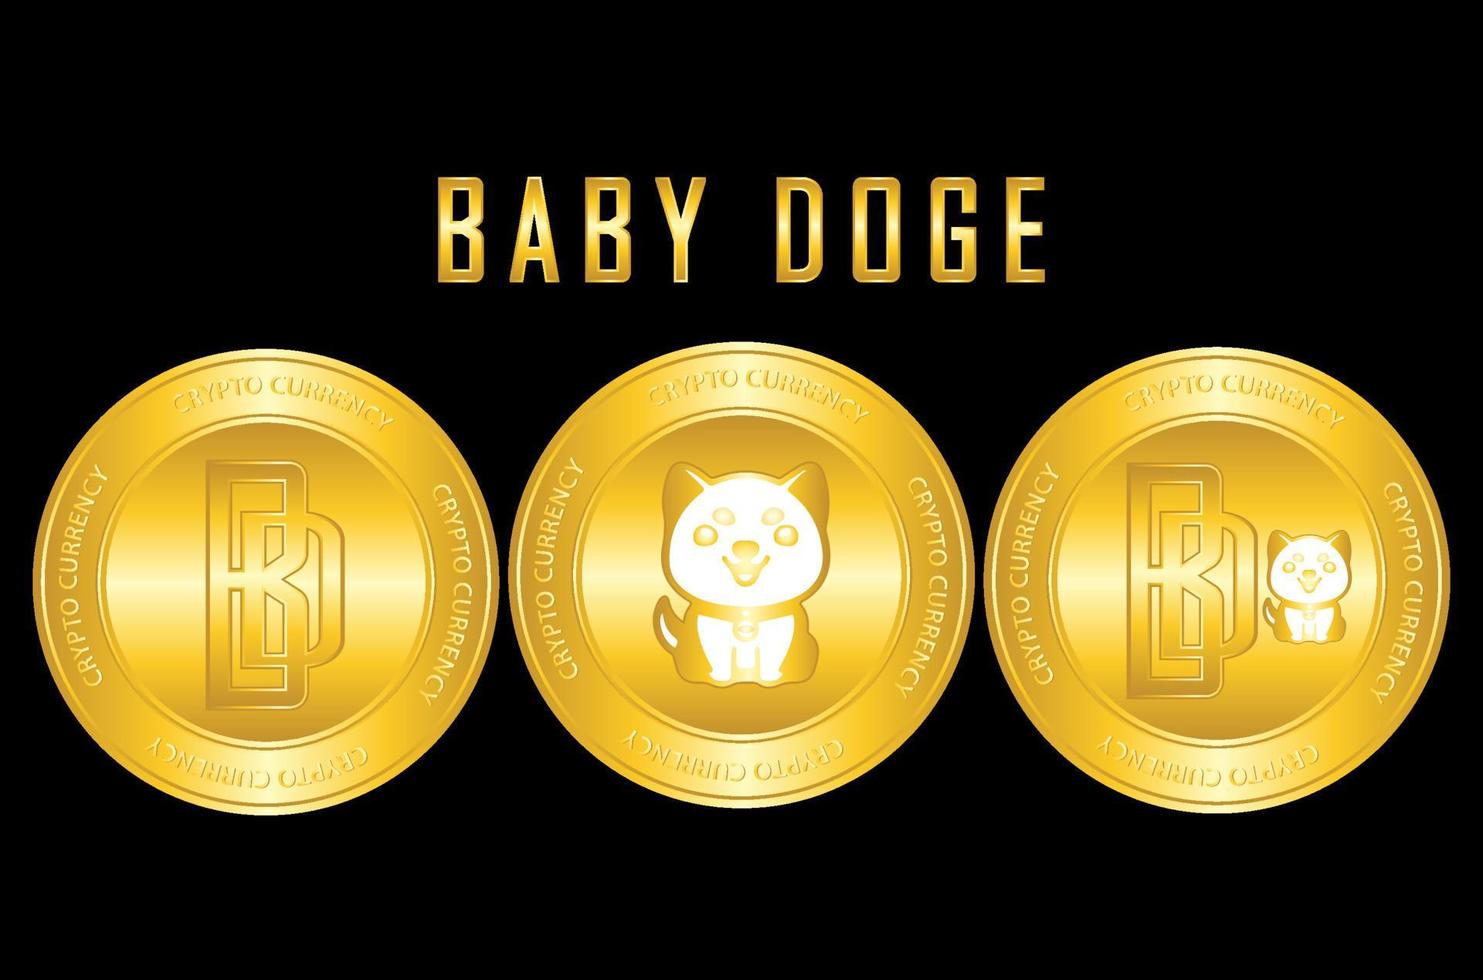 Baby Doge crypto currency icon set logo con texto y mascota vector